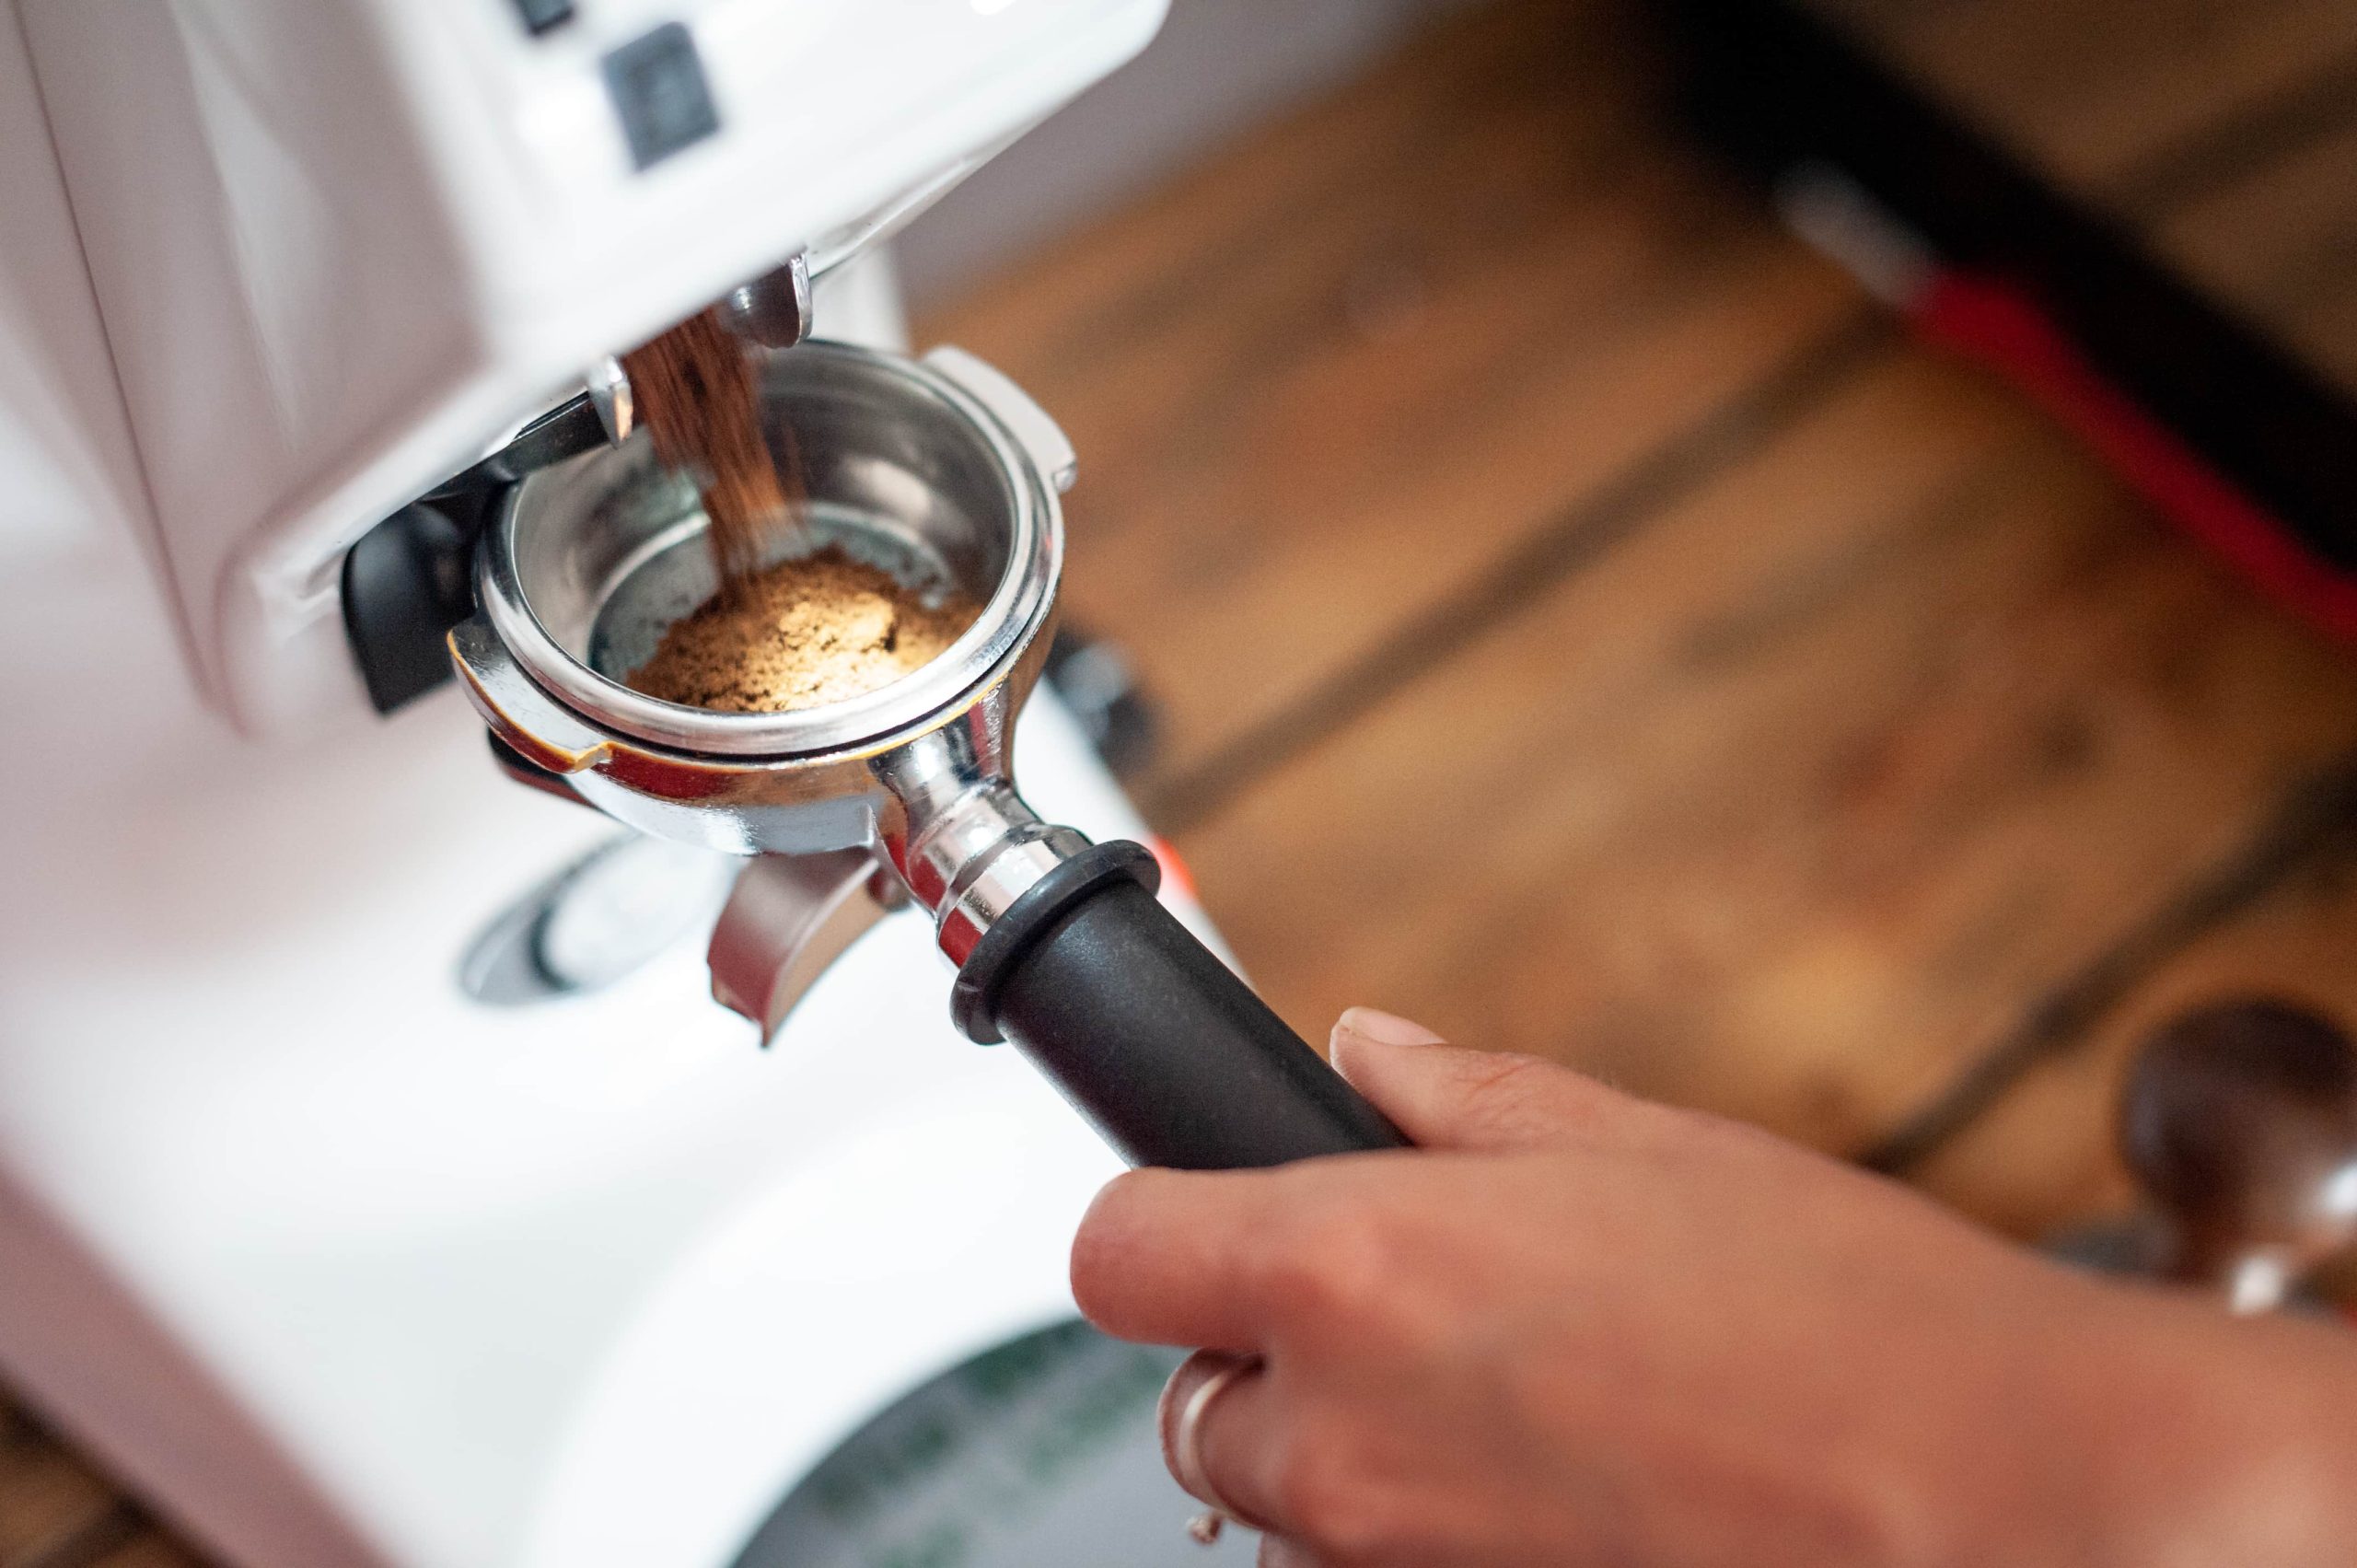 espresso coffee being ground into a portafilter